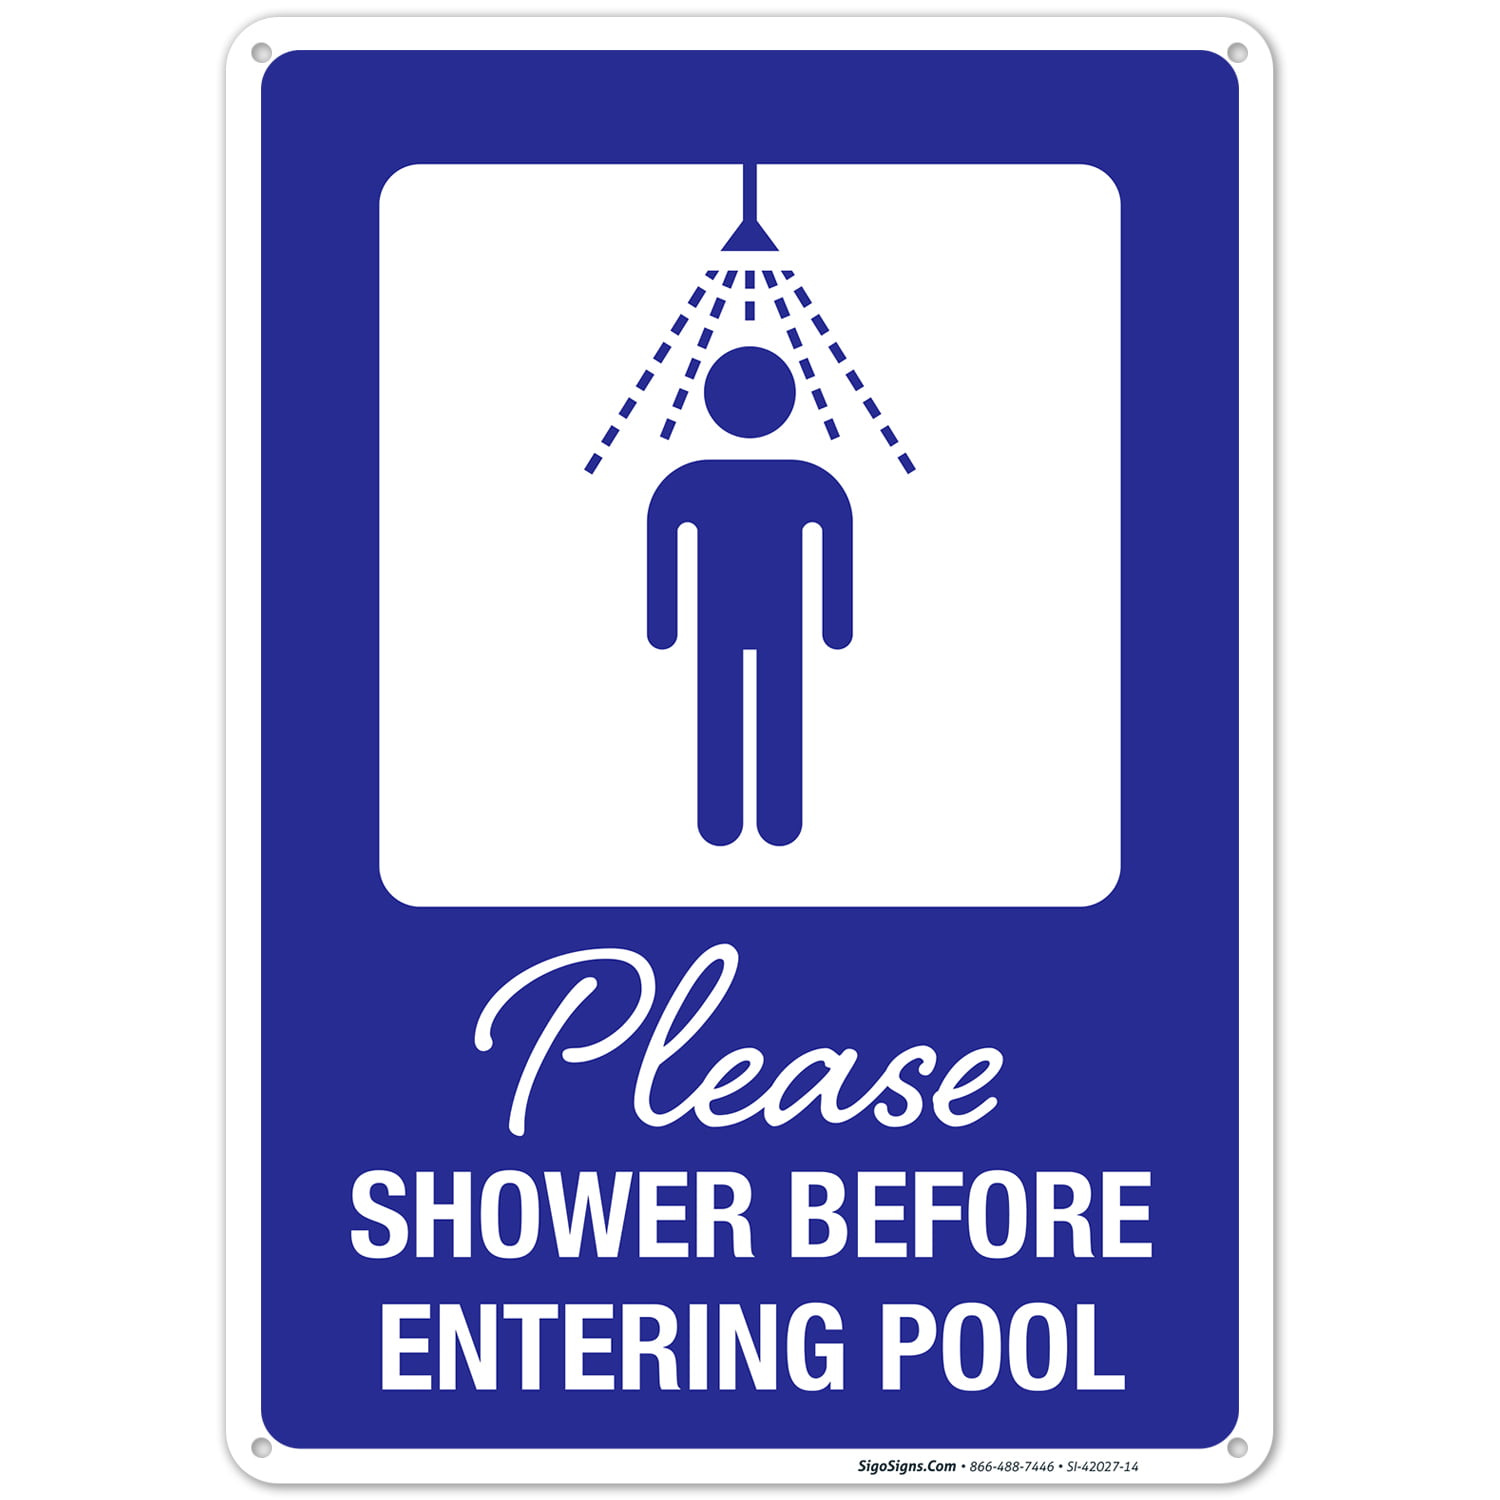 Please Shower Before Entering Pool Metal Aluminum composite sign 